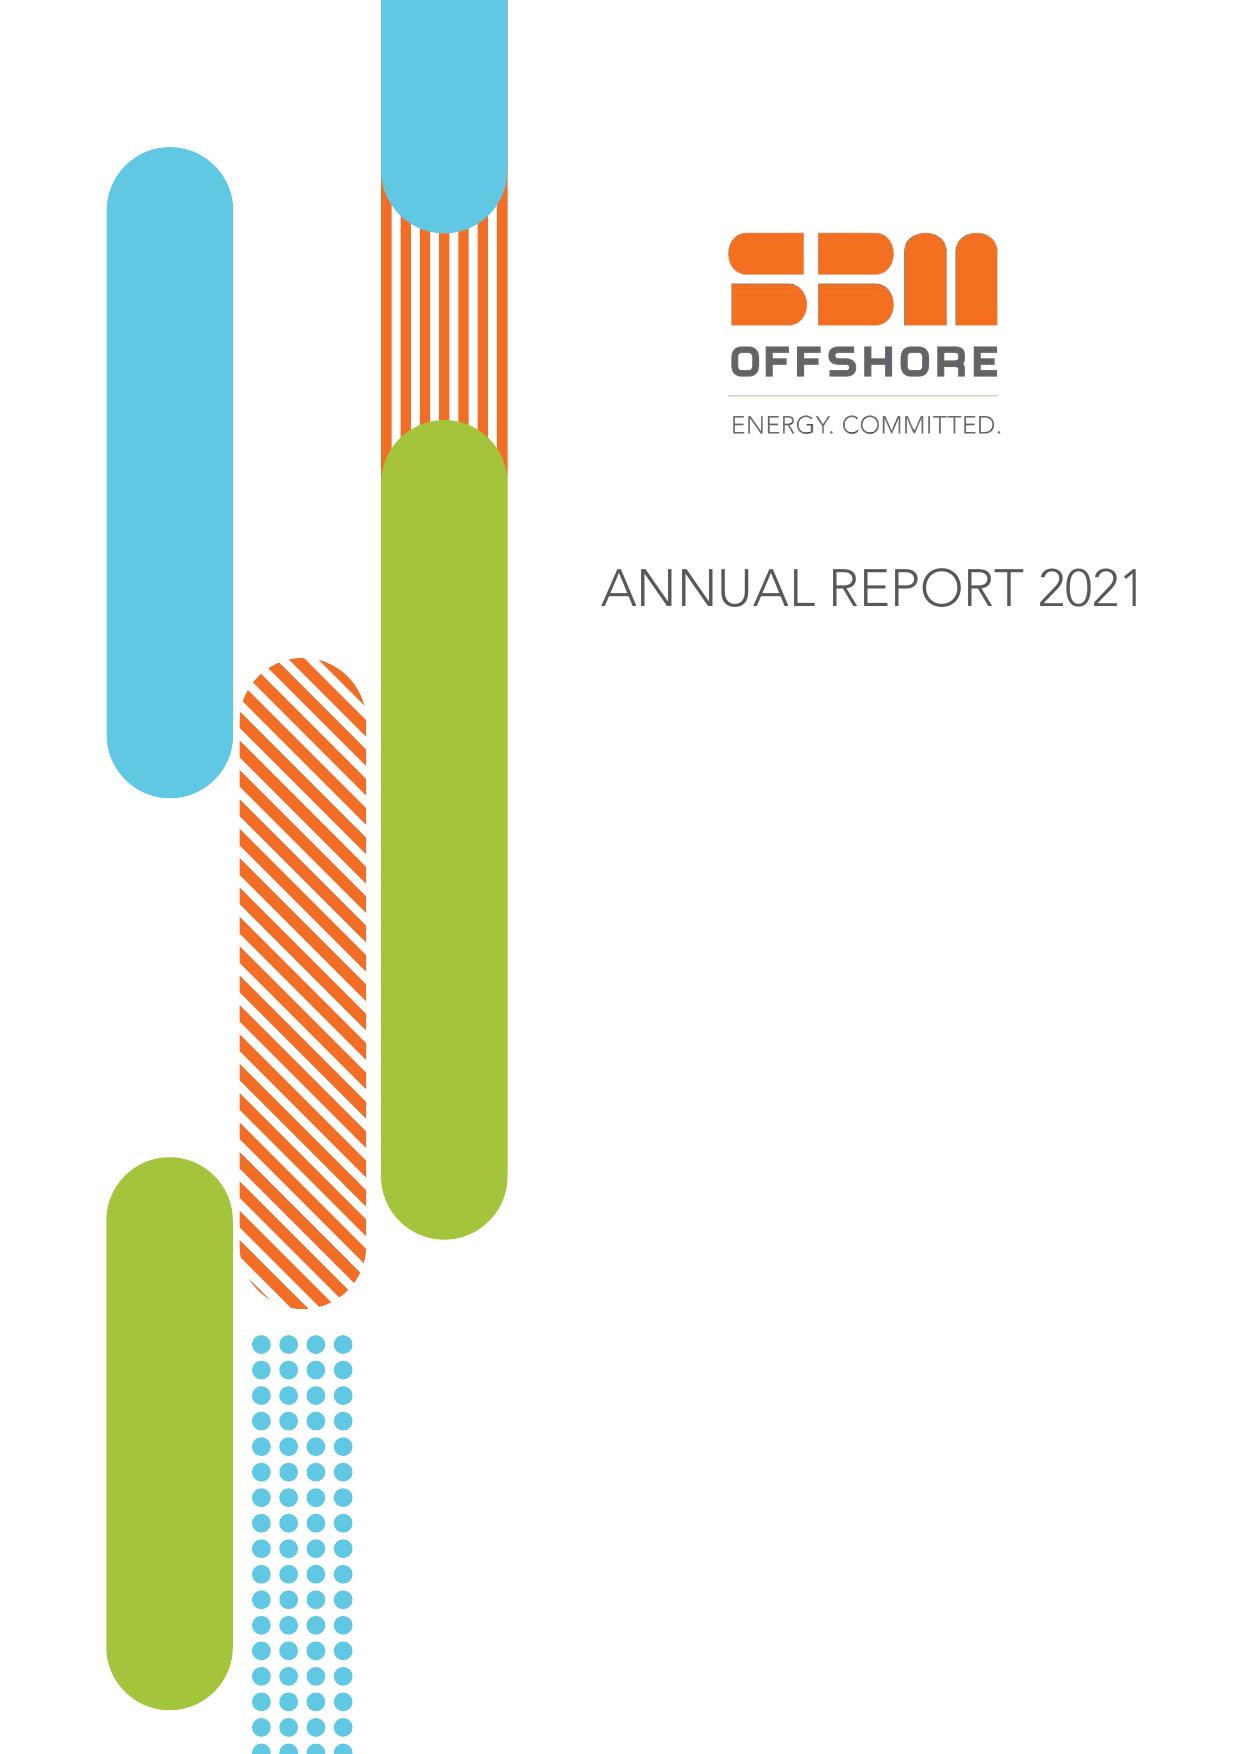 IDRSOLUTIONS 2022 Annual Report